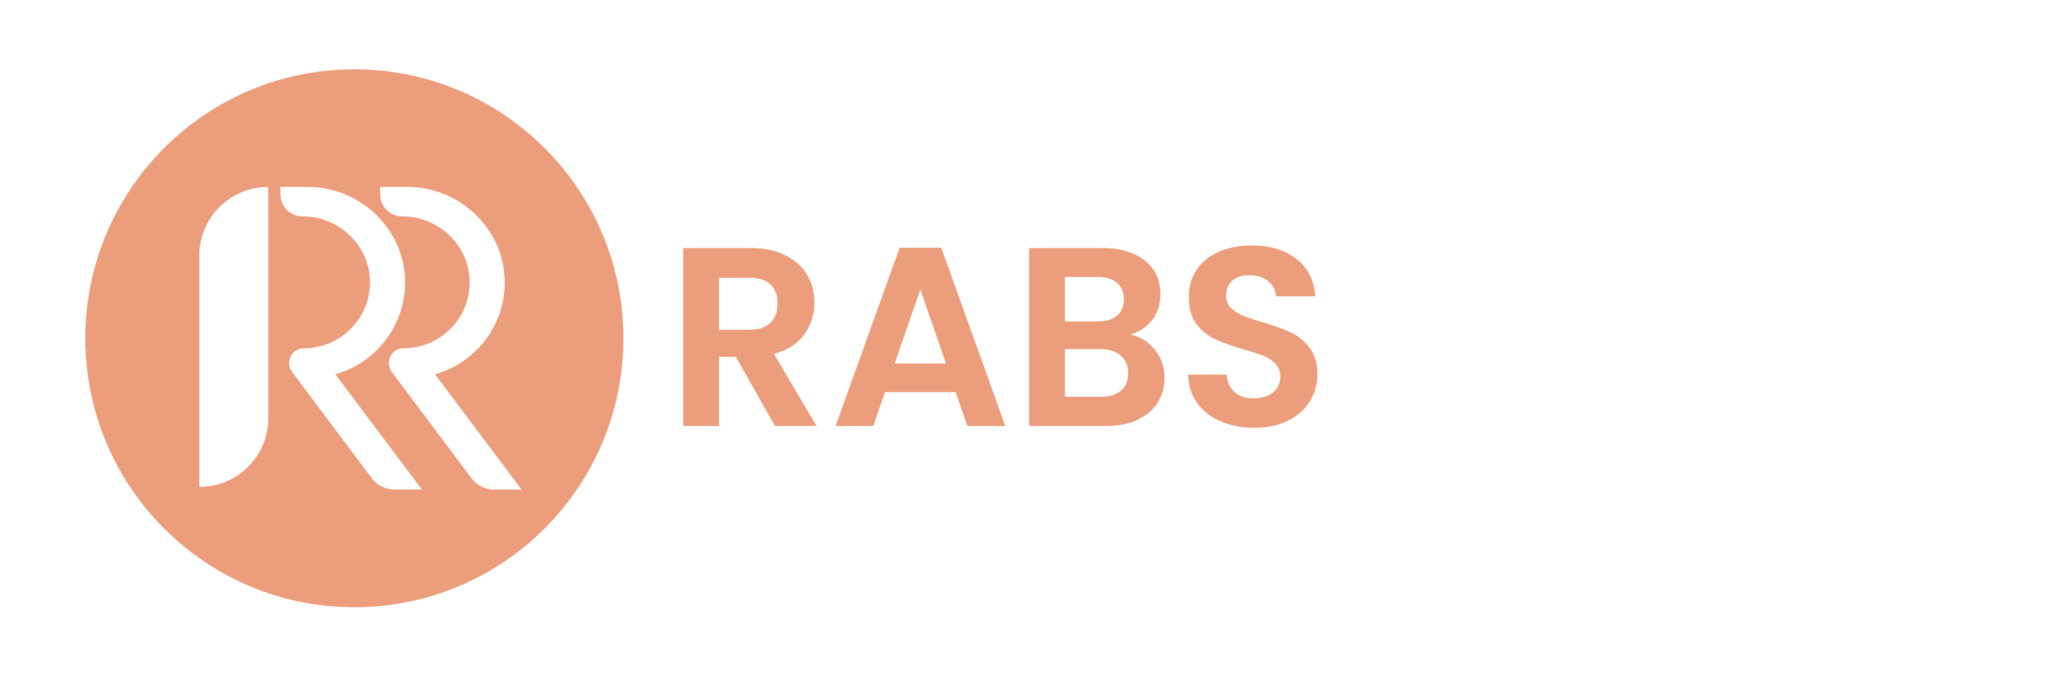 Rabs-Logo-0.1